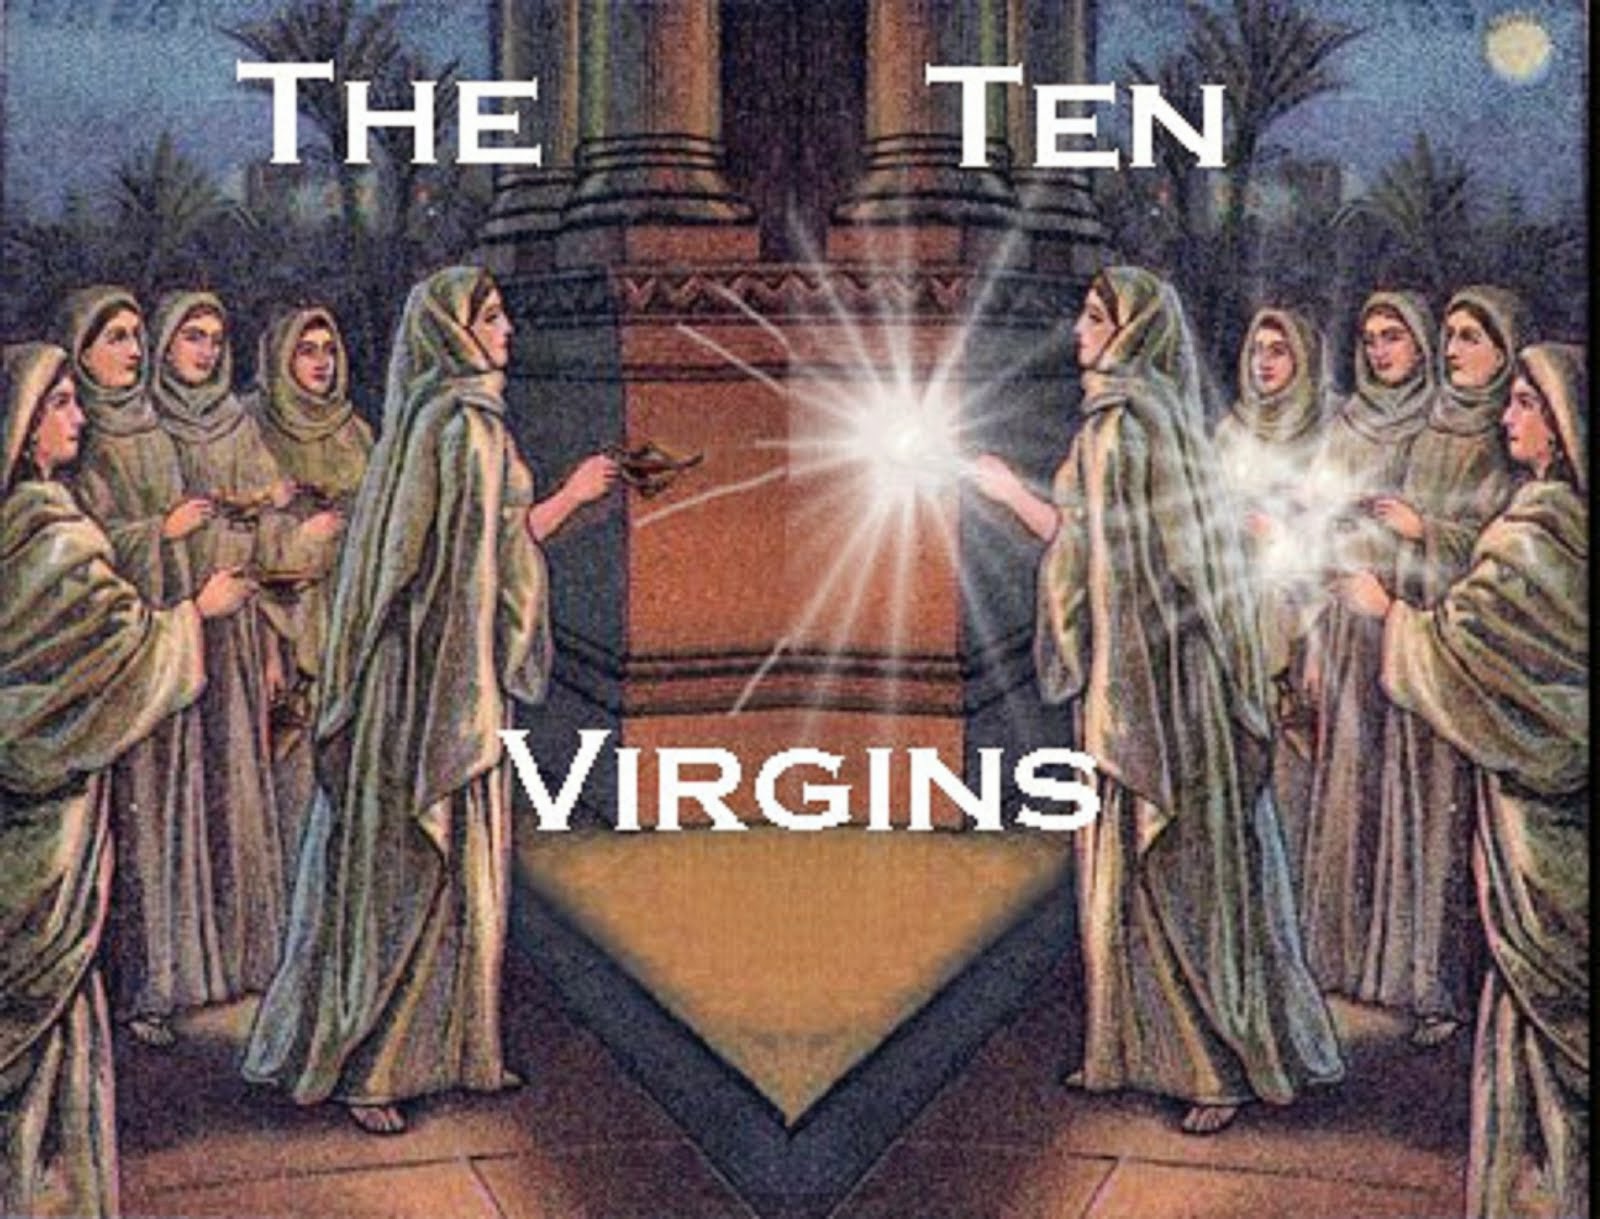 THE TEN VIRGINS GO TO HELL